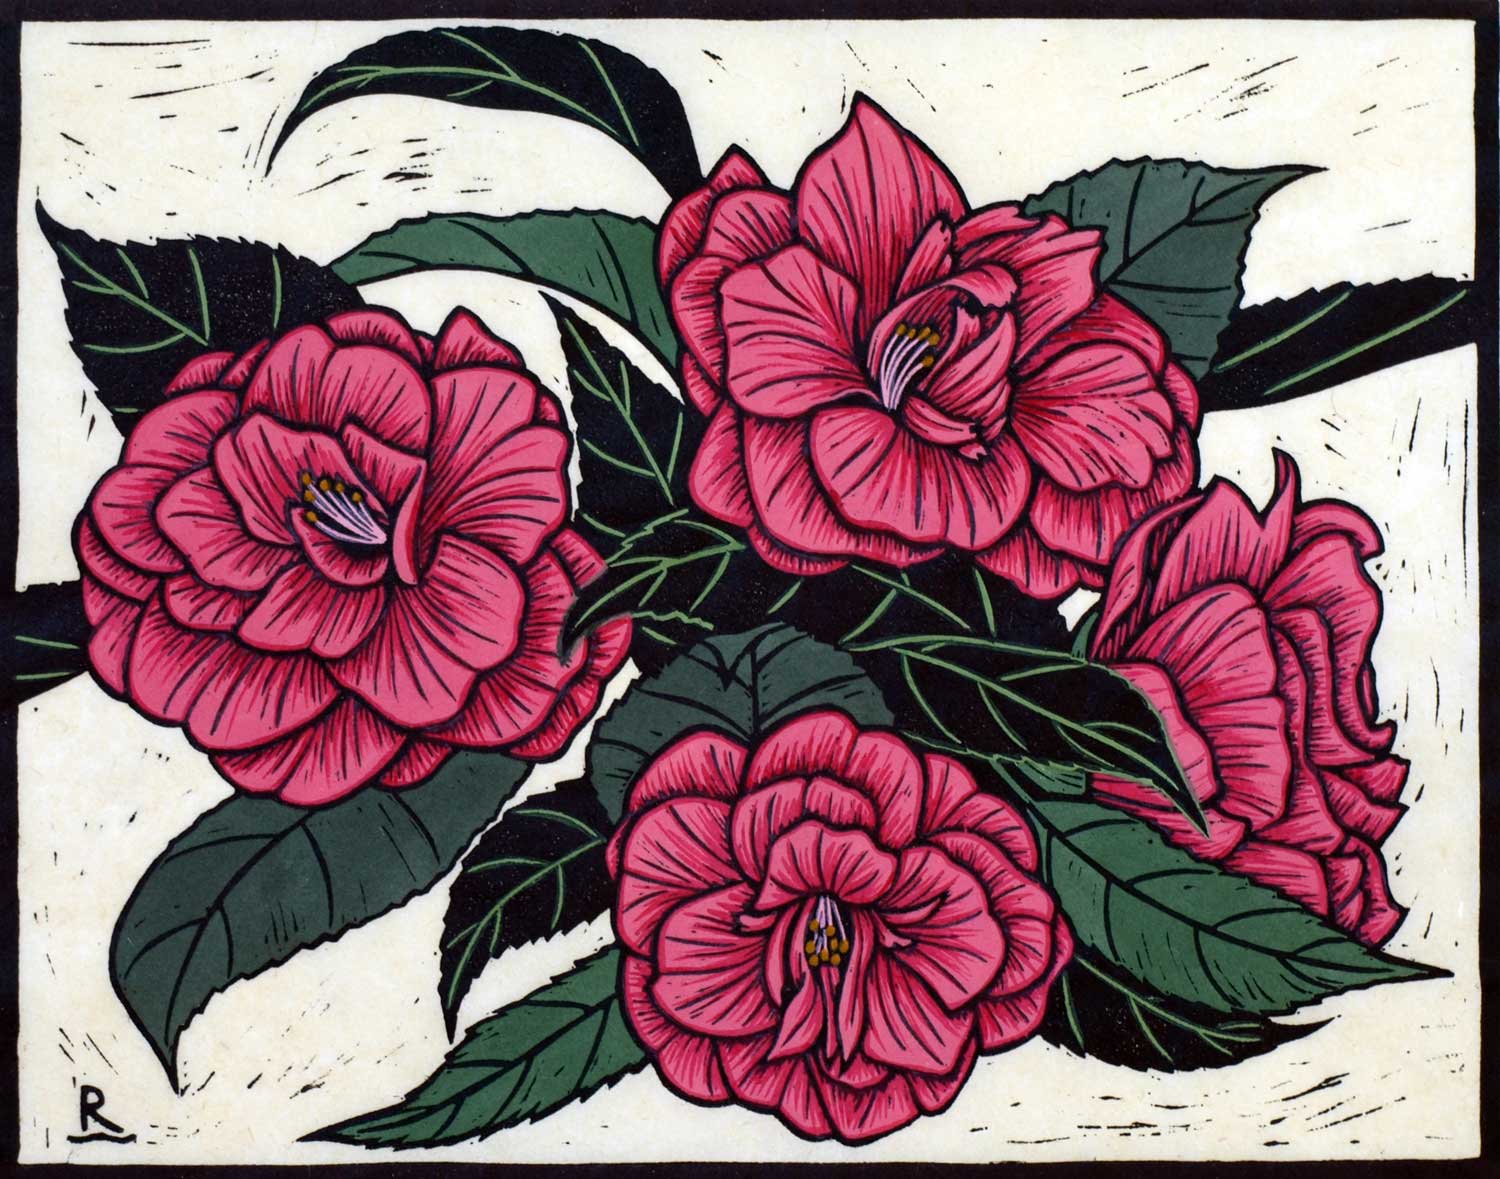 camellia-linocut-rachel-newling.jpg